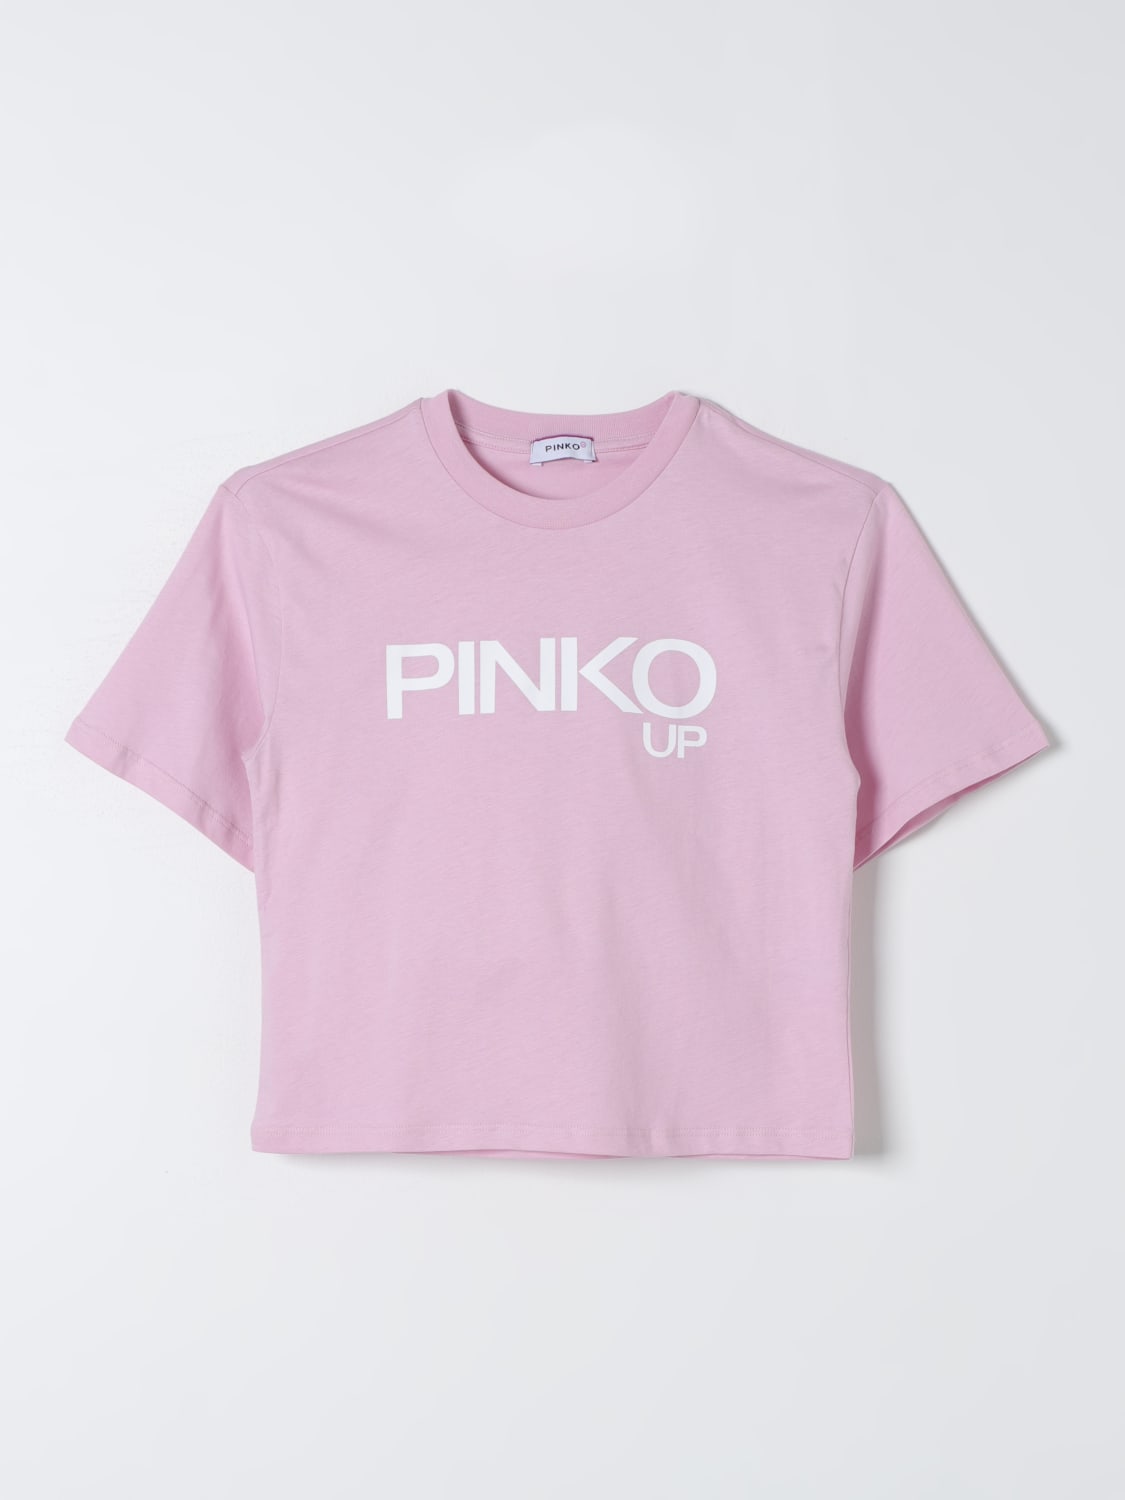 Up Basic 2 - Rosa - Camiseta Niña